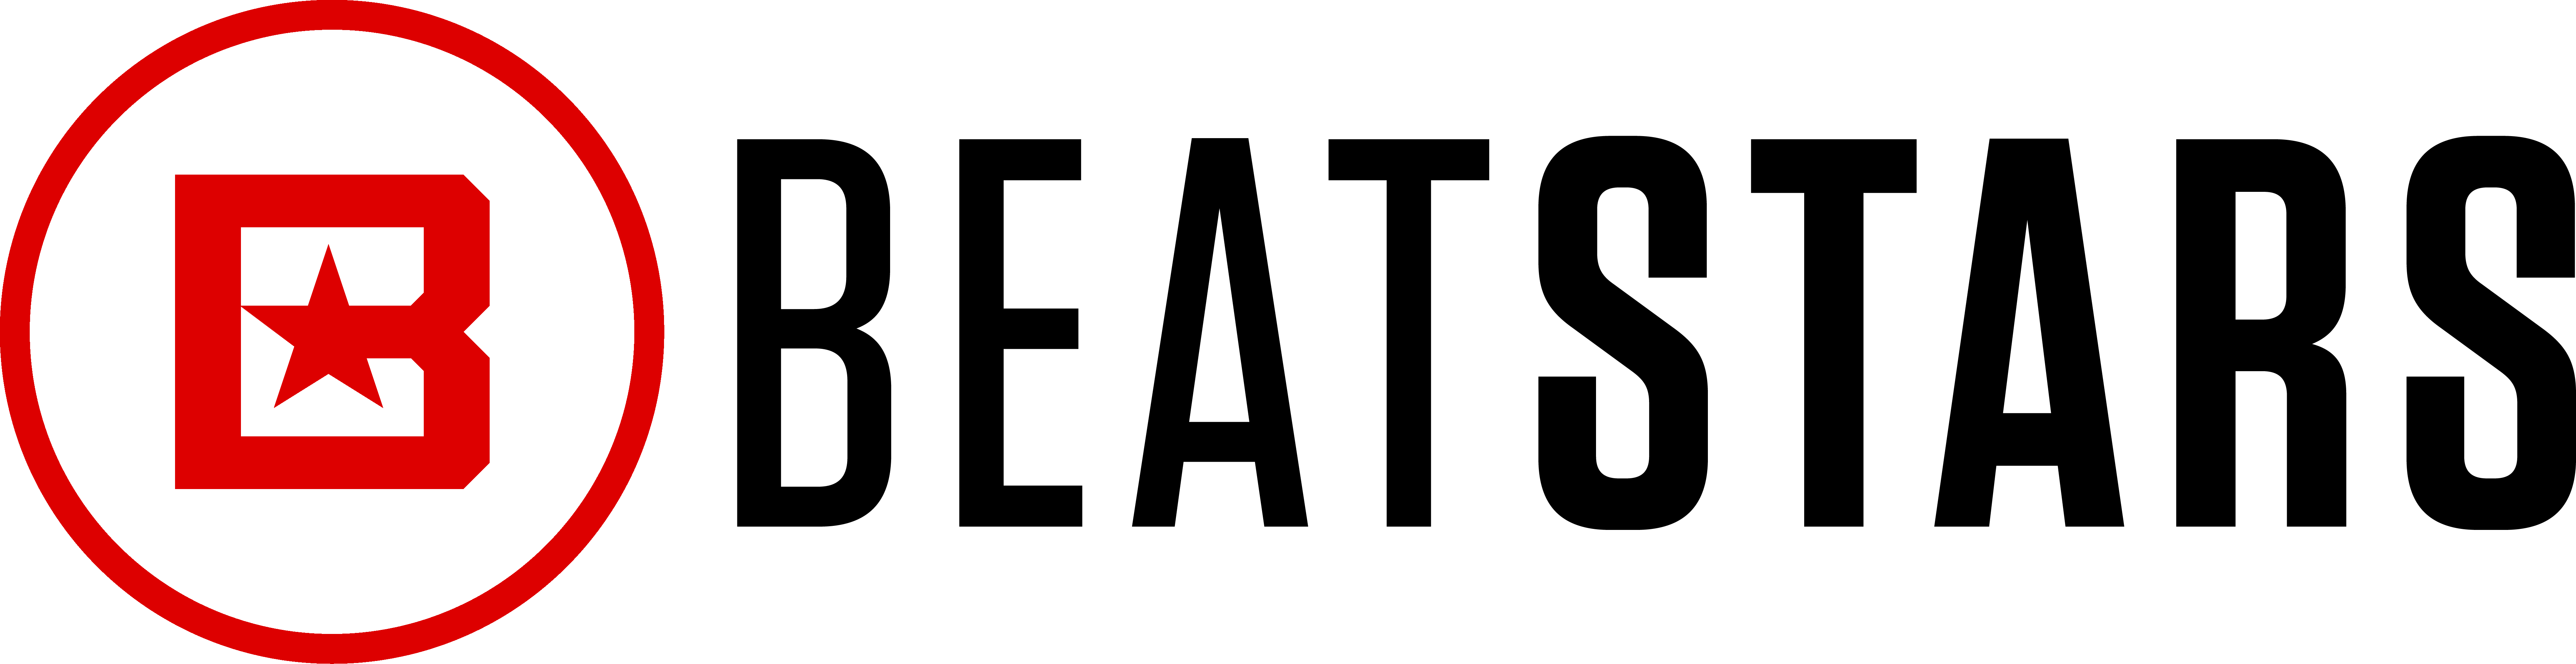 Cool Beat Logo - BeatStars - Hip Hop Music Producer & Production Industry Blog